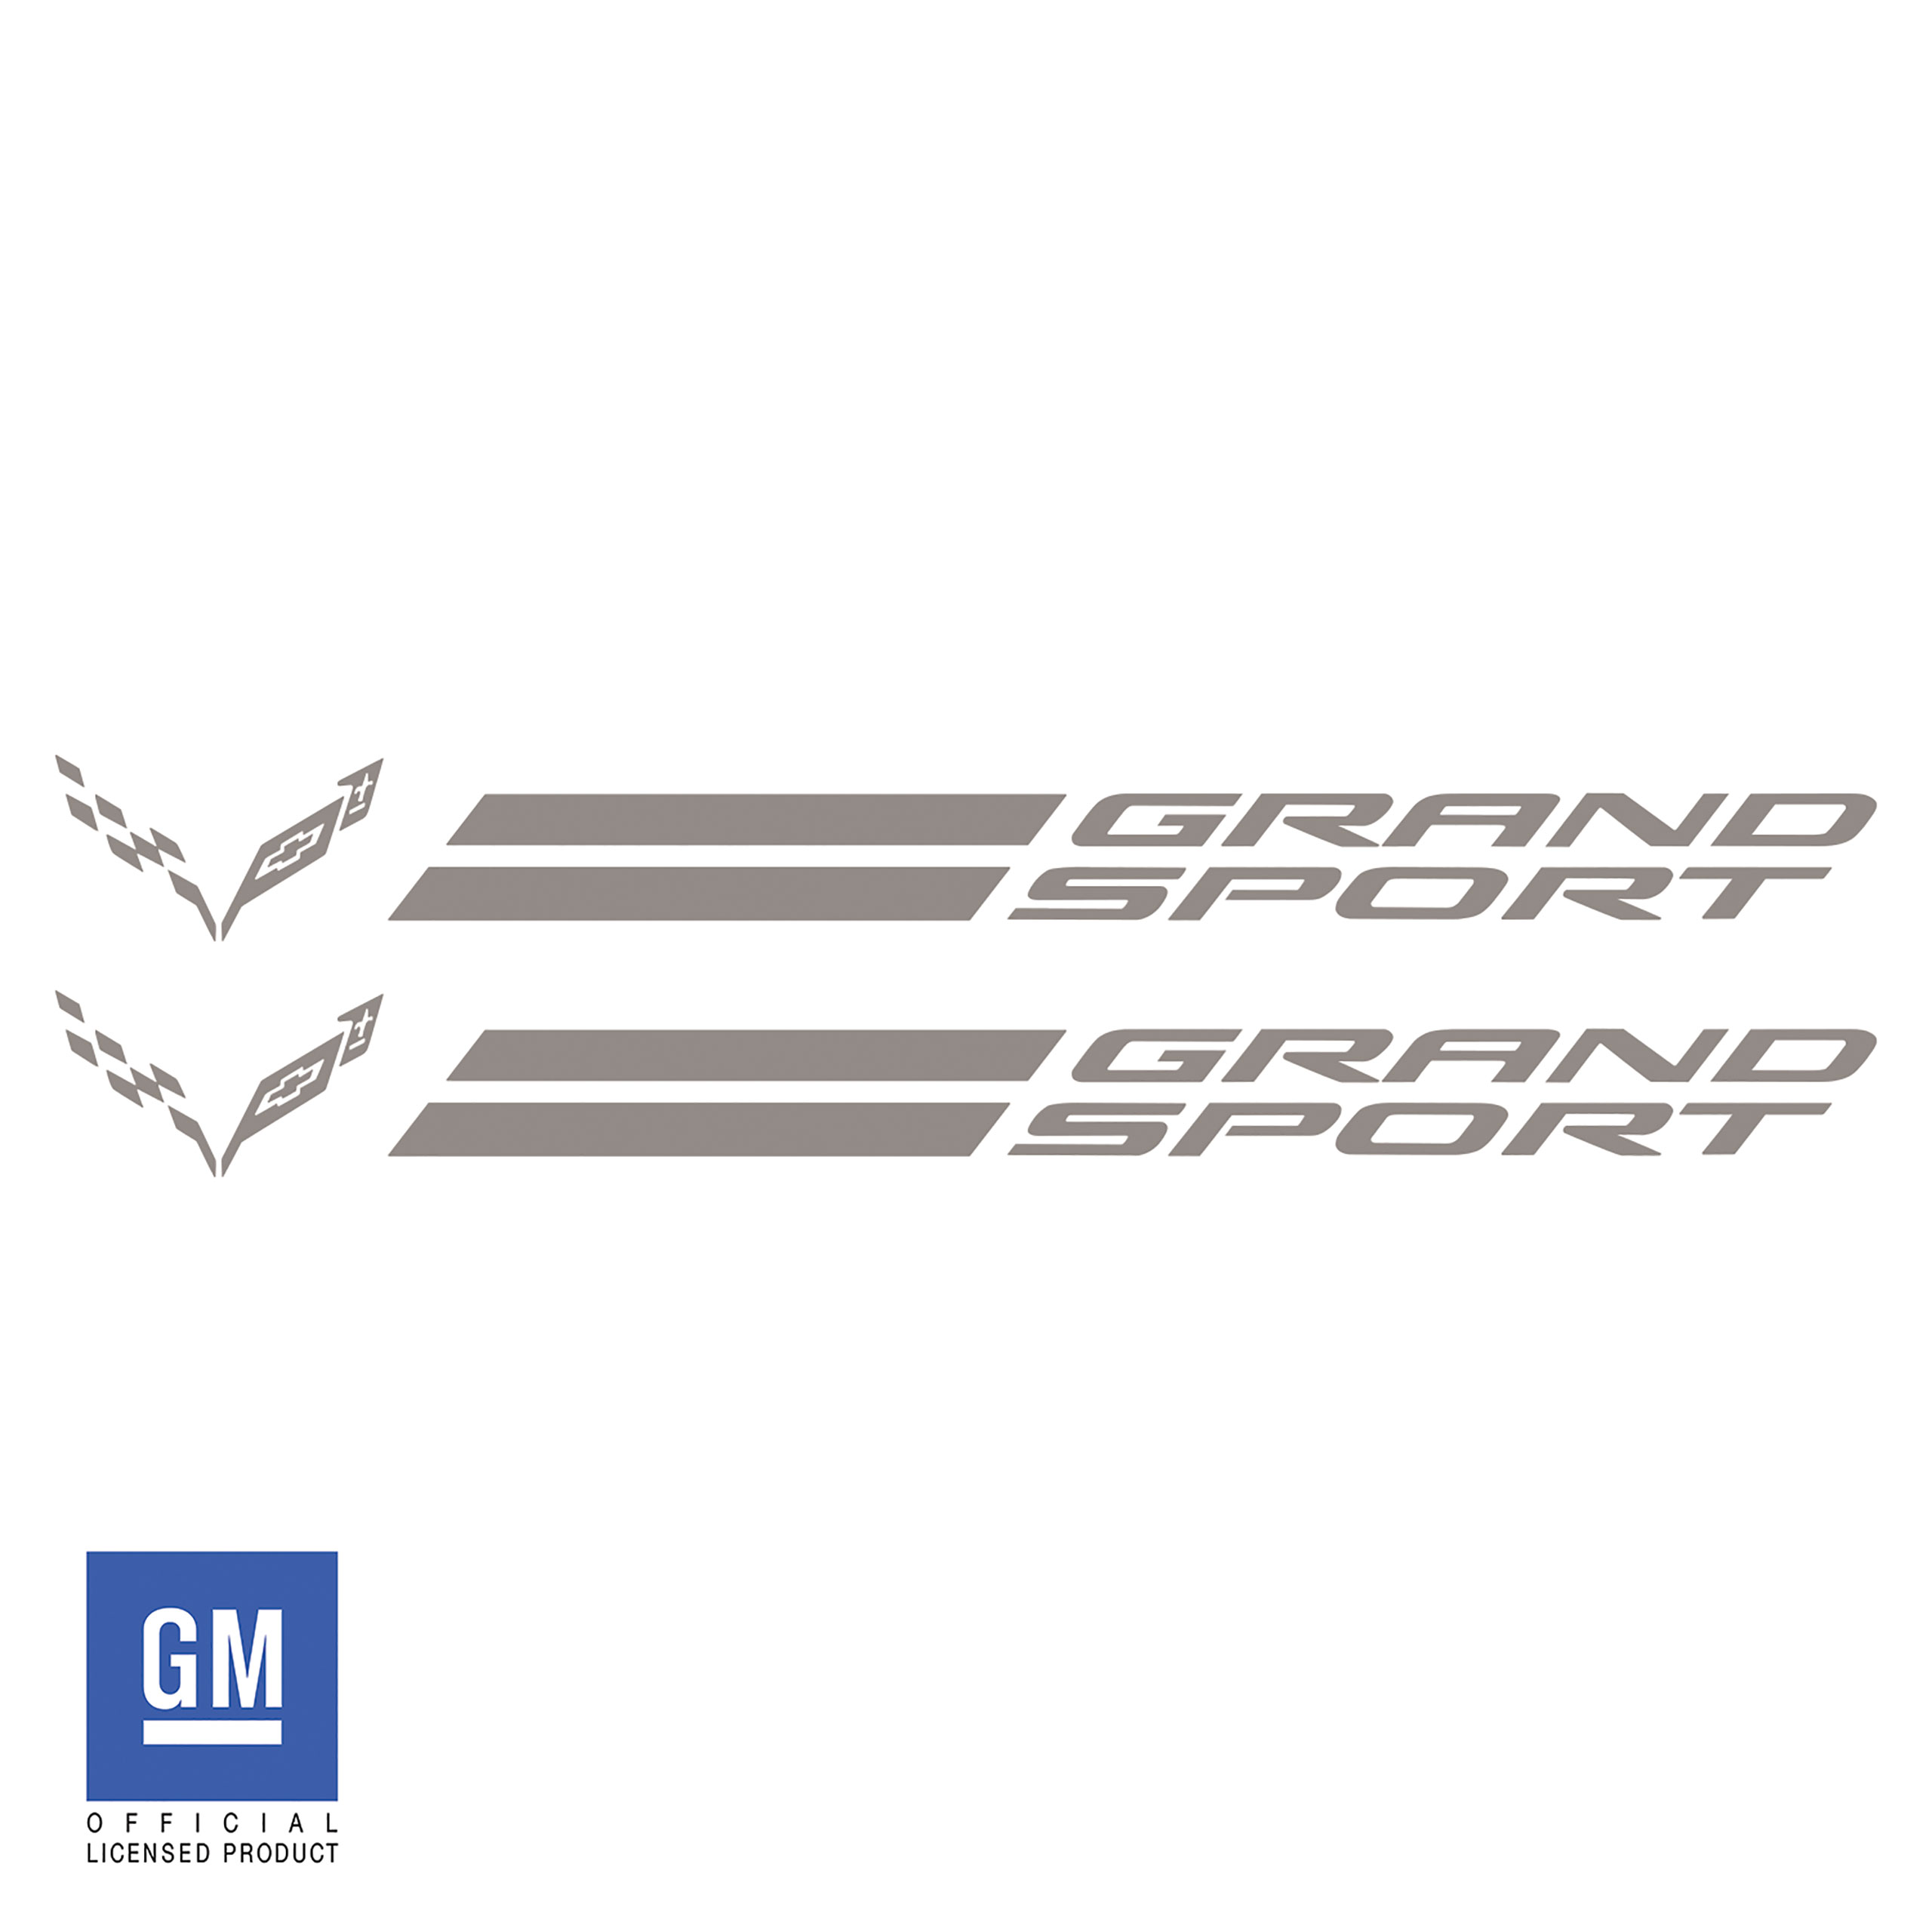 2014-2019 C7 Corvette Grand Sport Door Sill Vinyl Overlay Decals - Gloss Silver